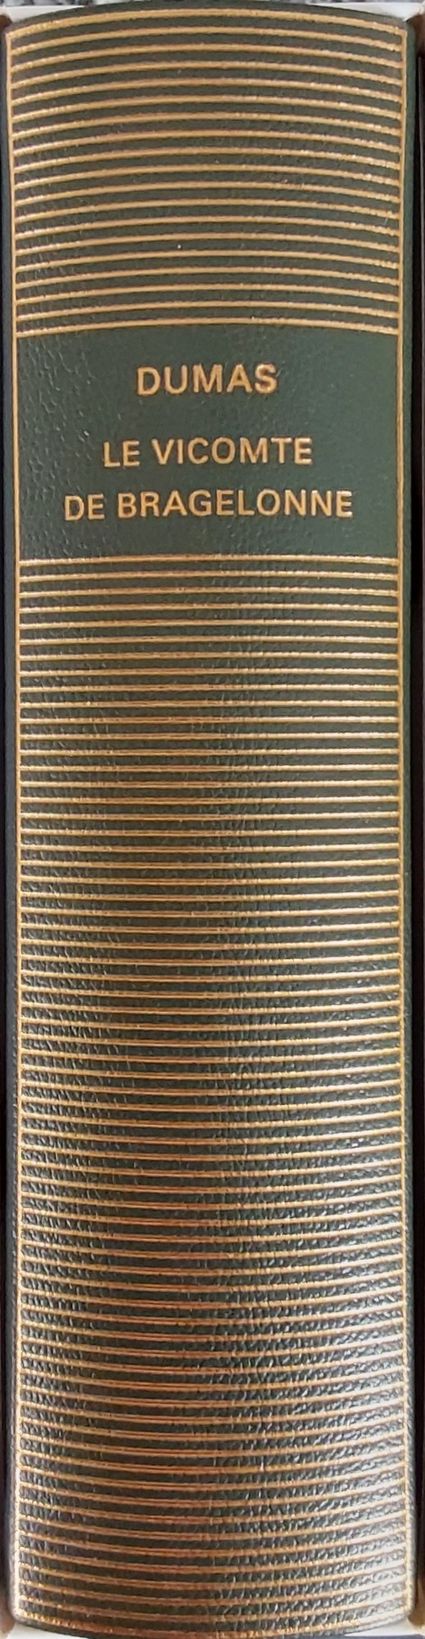 Volume 669 d'Alexandre Dumas dans la Bibliothèque de la Pléiade.